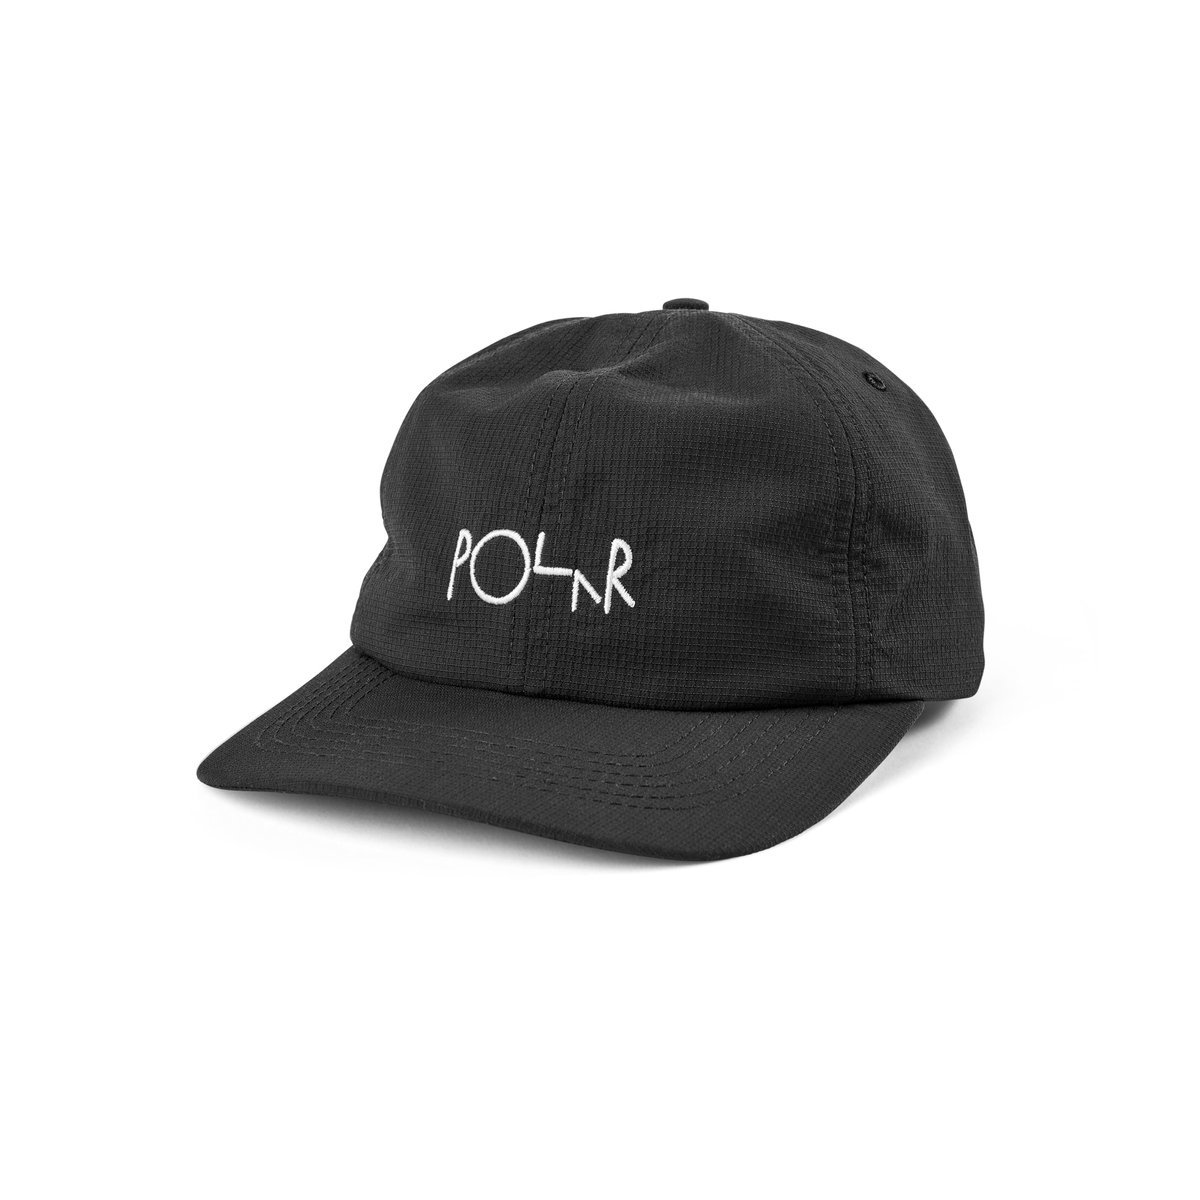 polar Lightweight Cap - Black BLACK | Clothes \ Cap \ Cap Brands ...